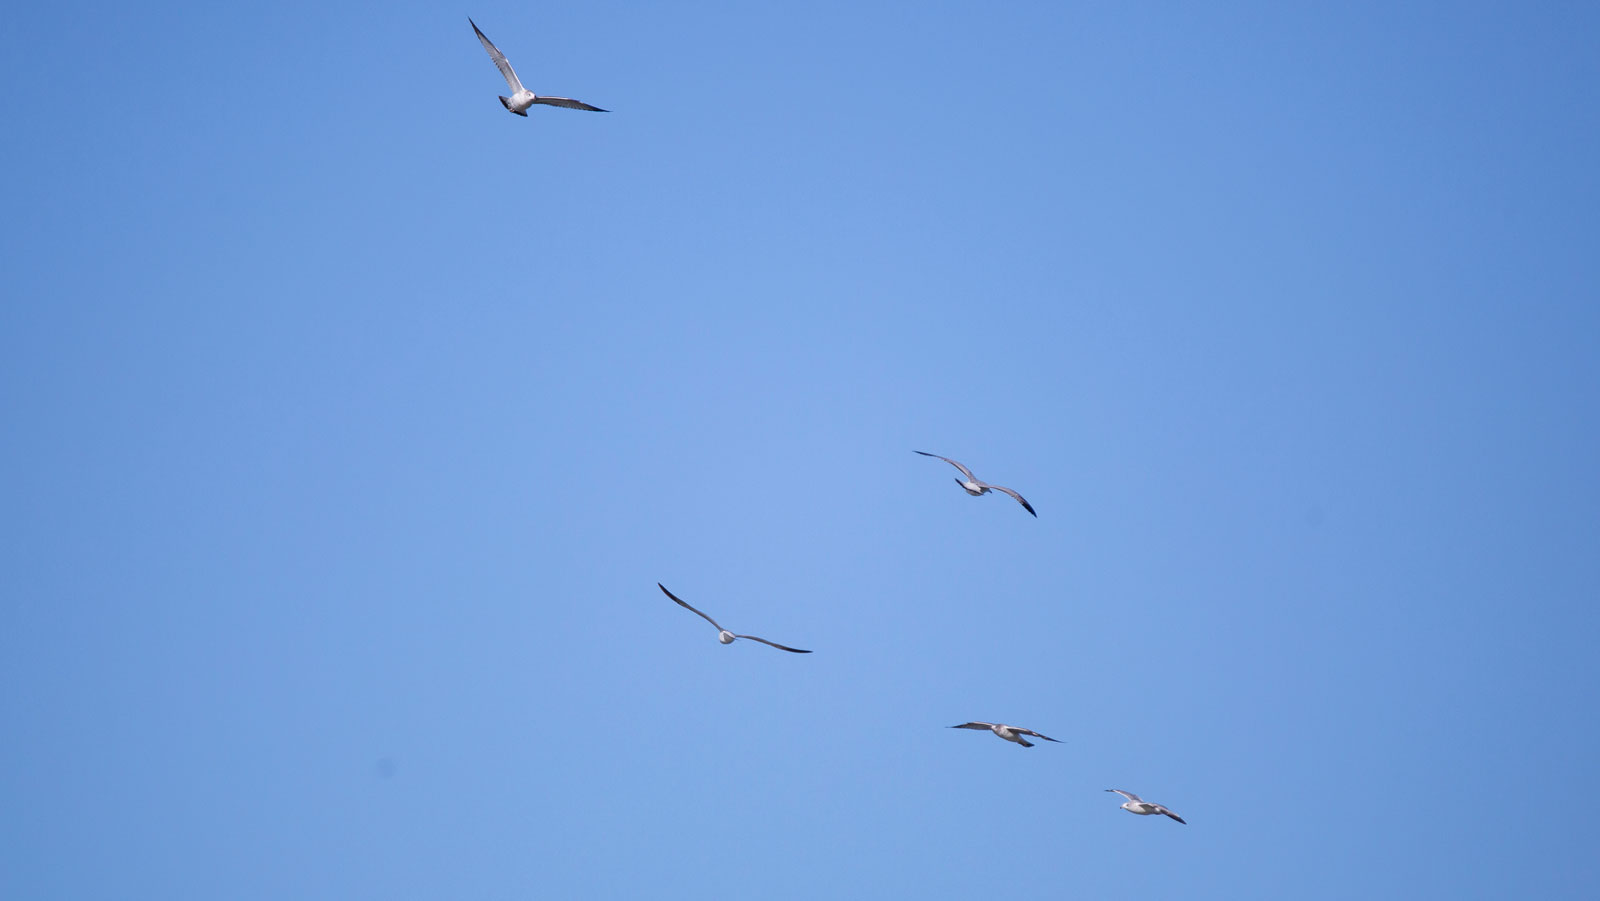 Ring-billed gulls circling the blue sky